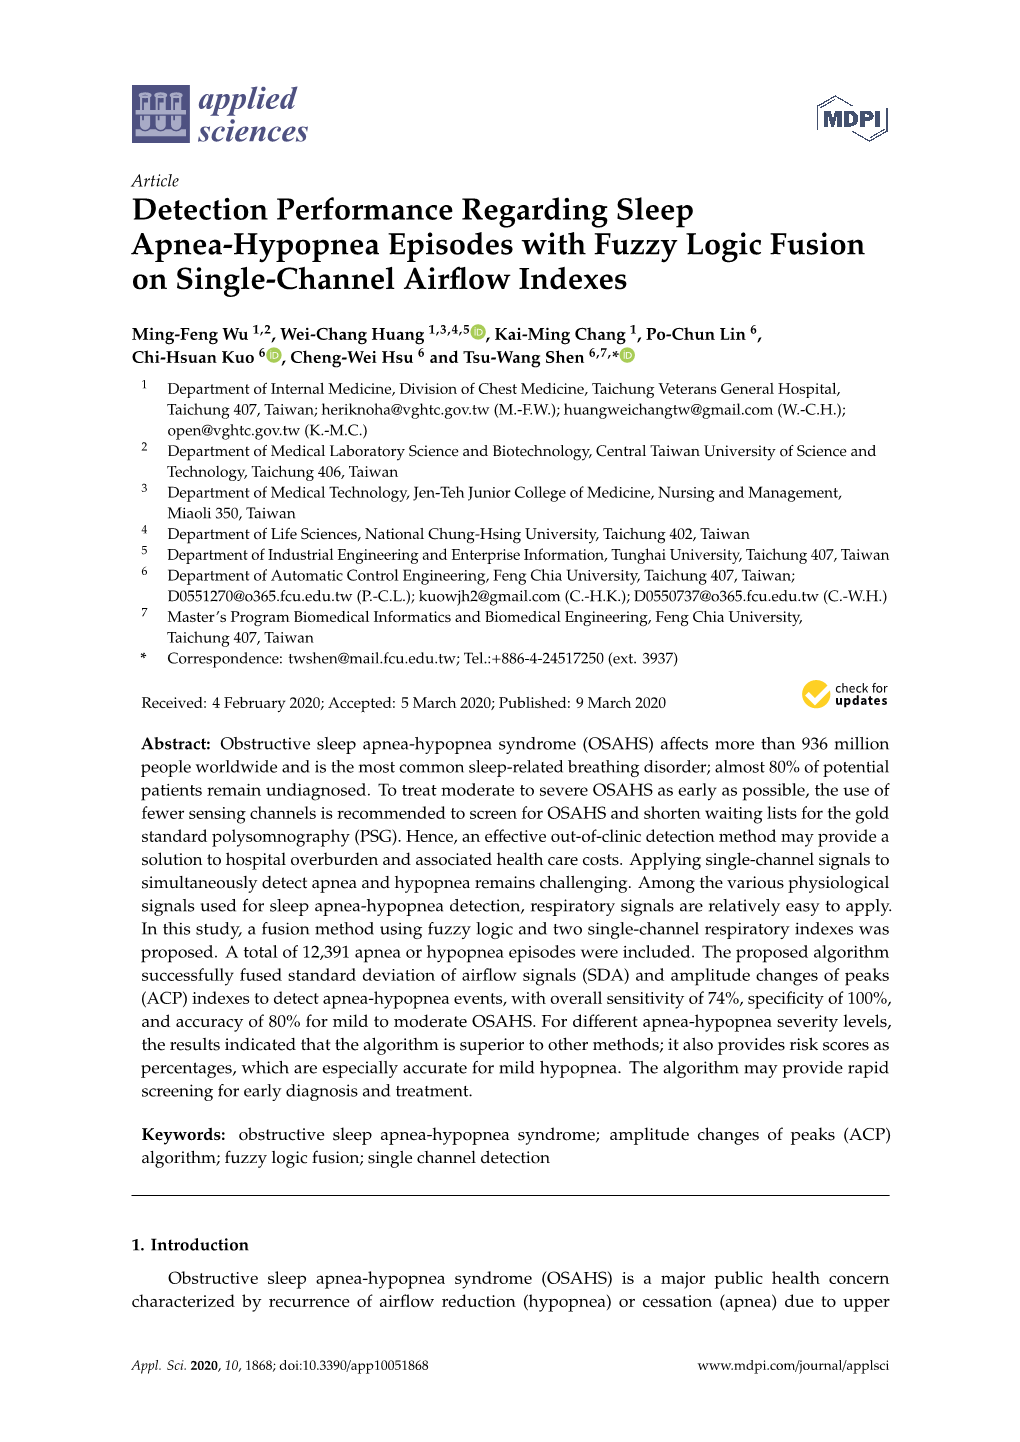 Detection Performance Regarding Sleep Apnea-Hypopnea Episodes with Fuzzy Logic Fusion on Single-Channel Airﬂow Indexes